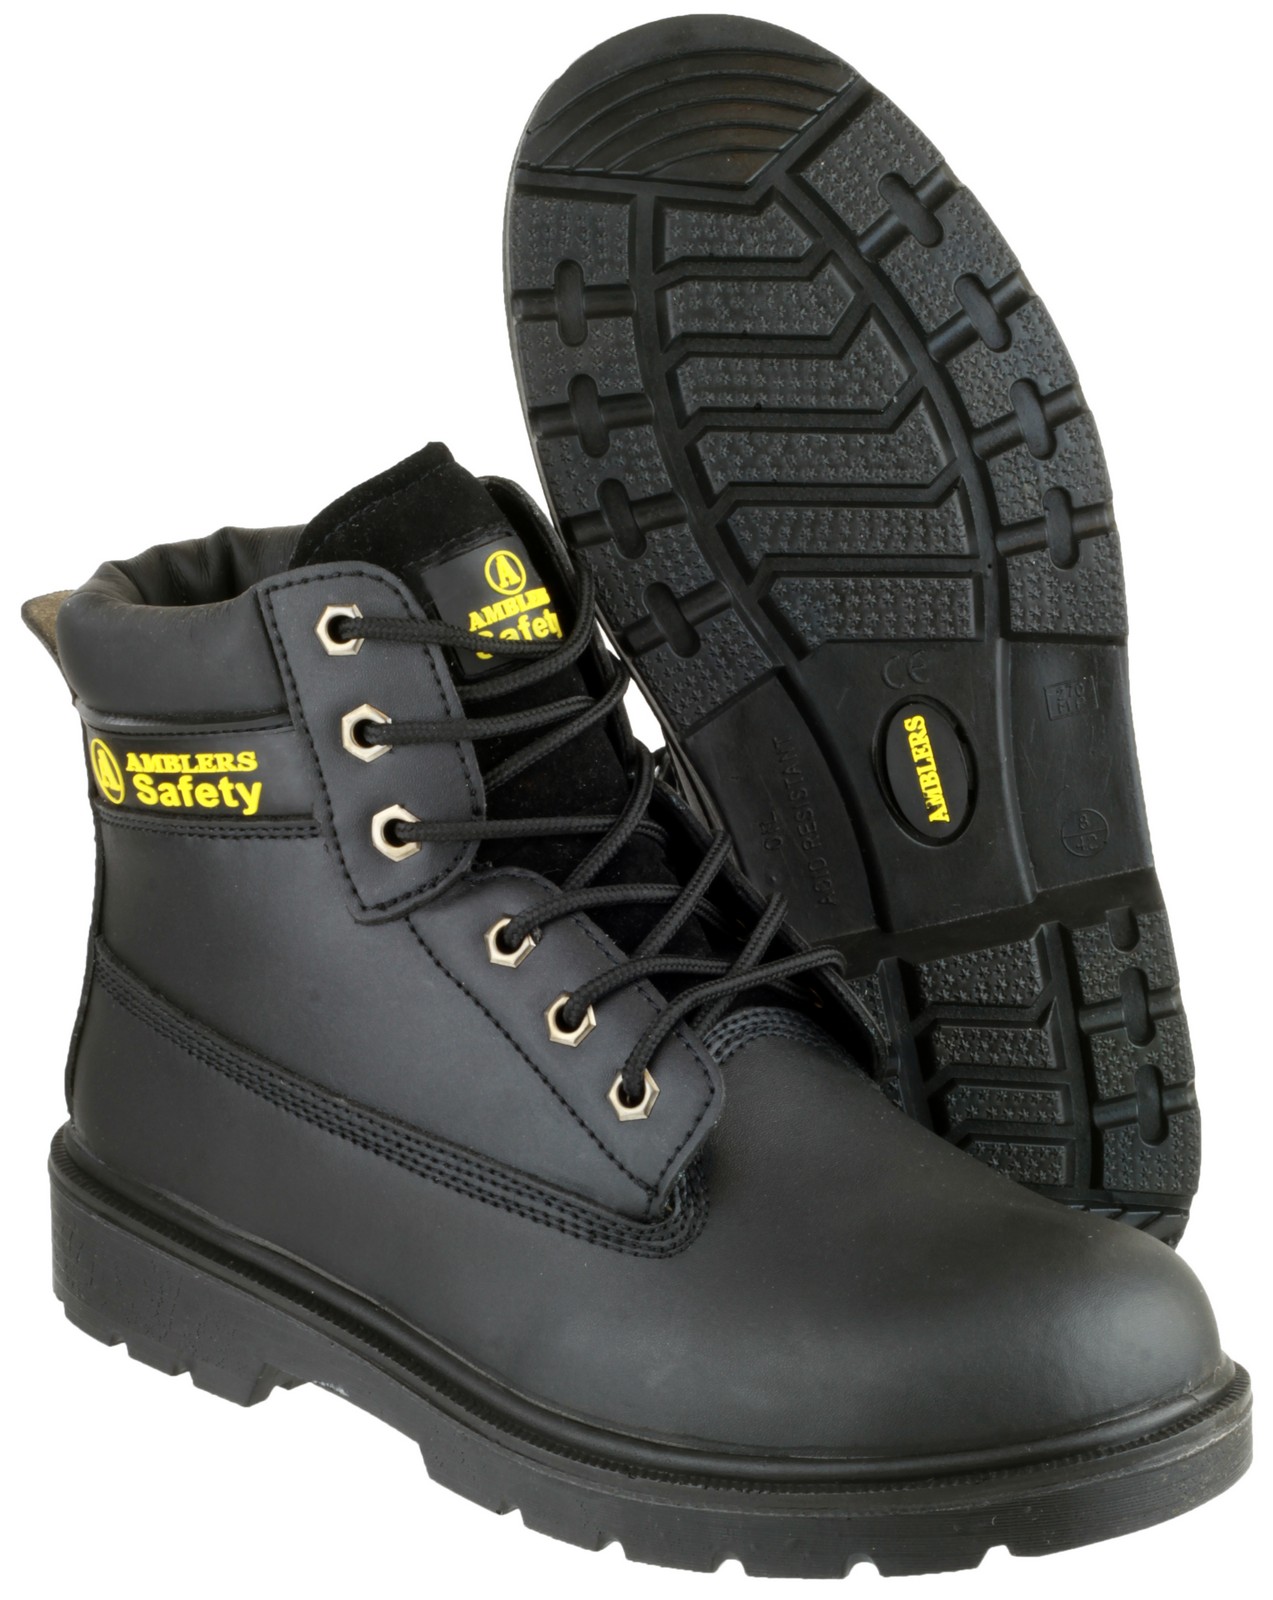 FS112 - Safety Ladies Boots - Black